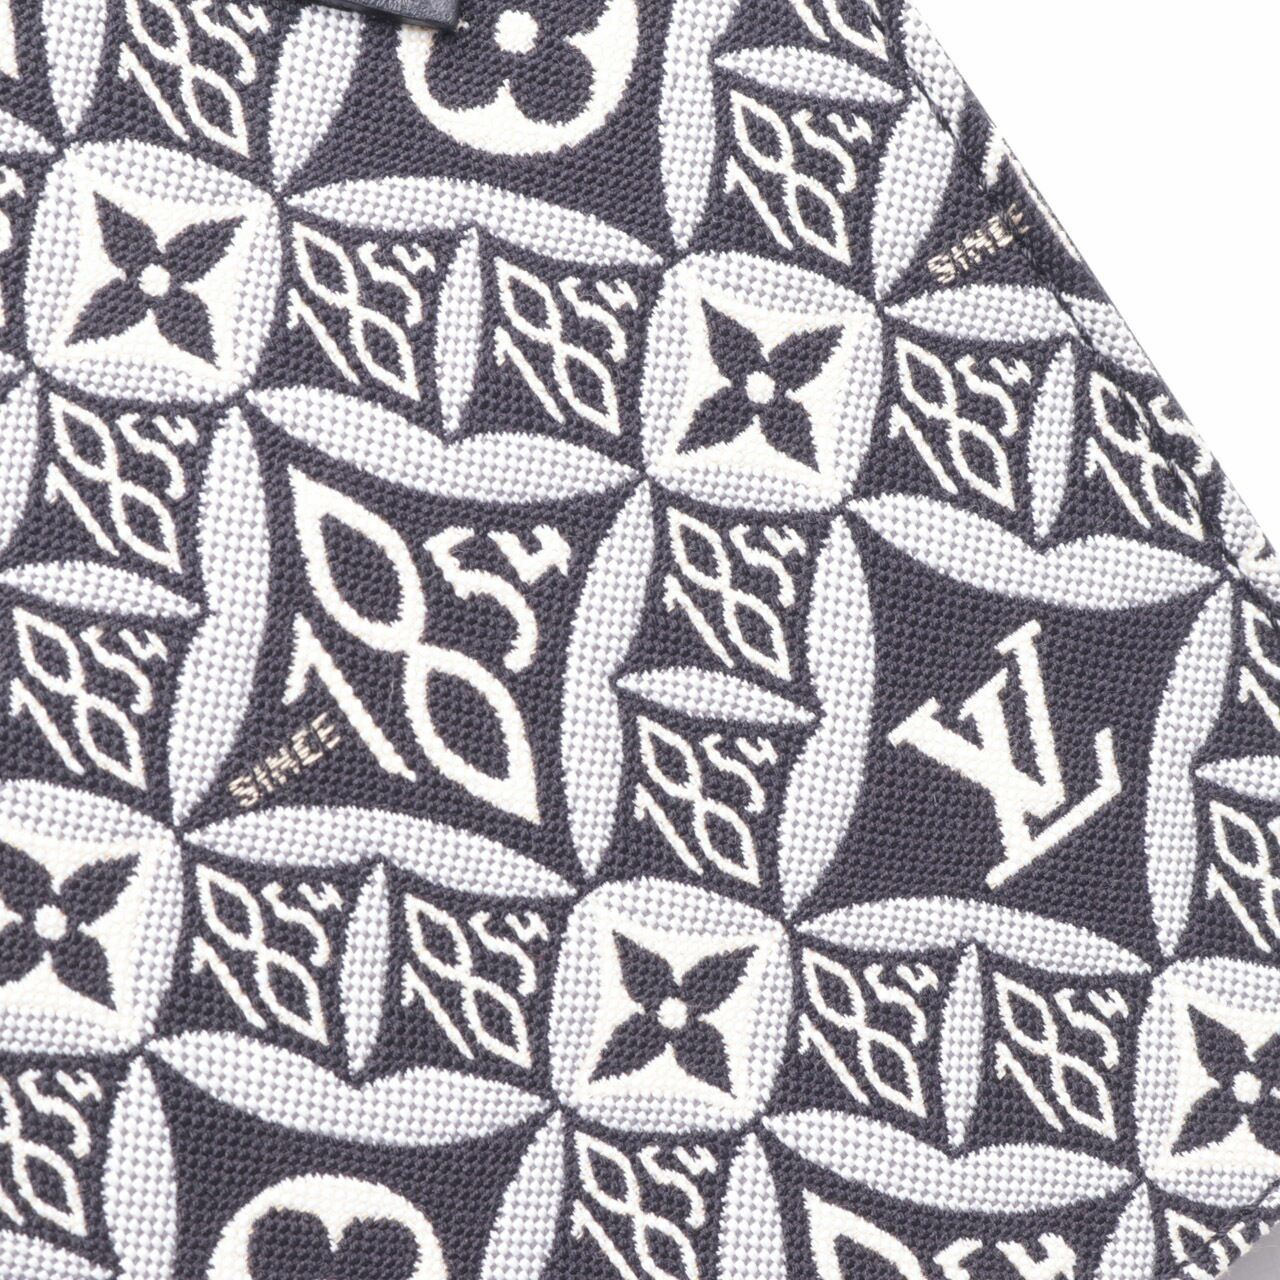 Louis Vuitton Petit Sac Plat Monogram Jacquard Satchel Bag